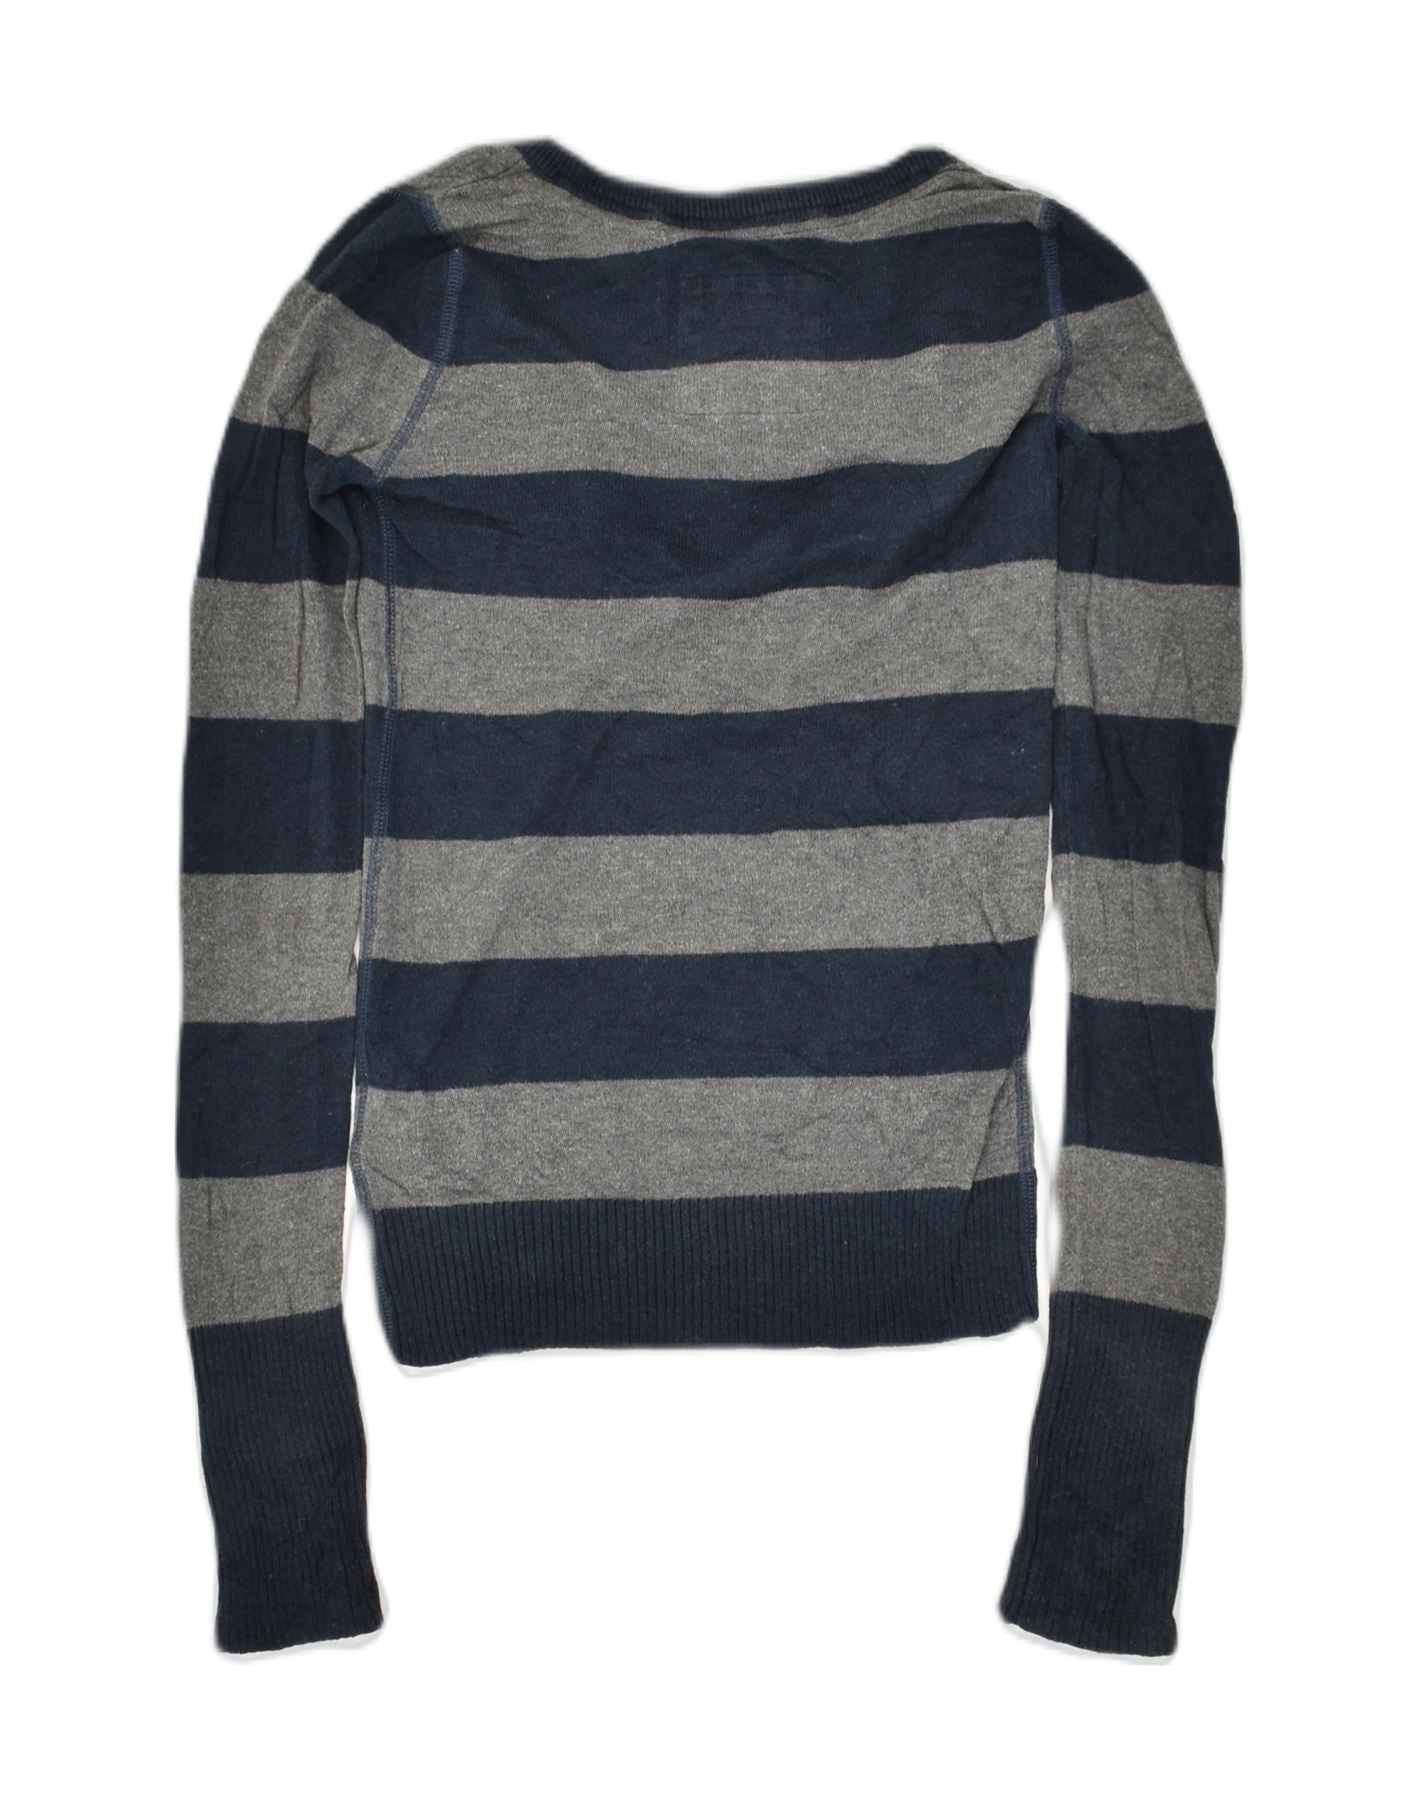 HOLLISTER Womens California Cardigan Sweater UK 12 Medium Grey Striped, Vintage & Second-Hand Clothing Online